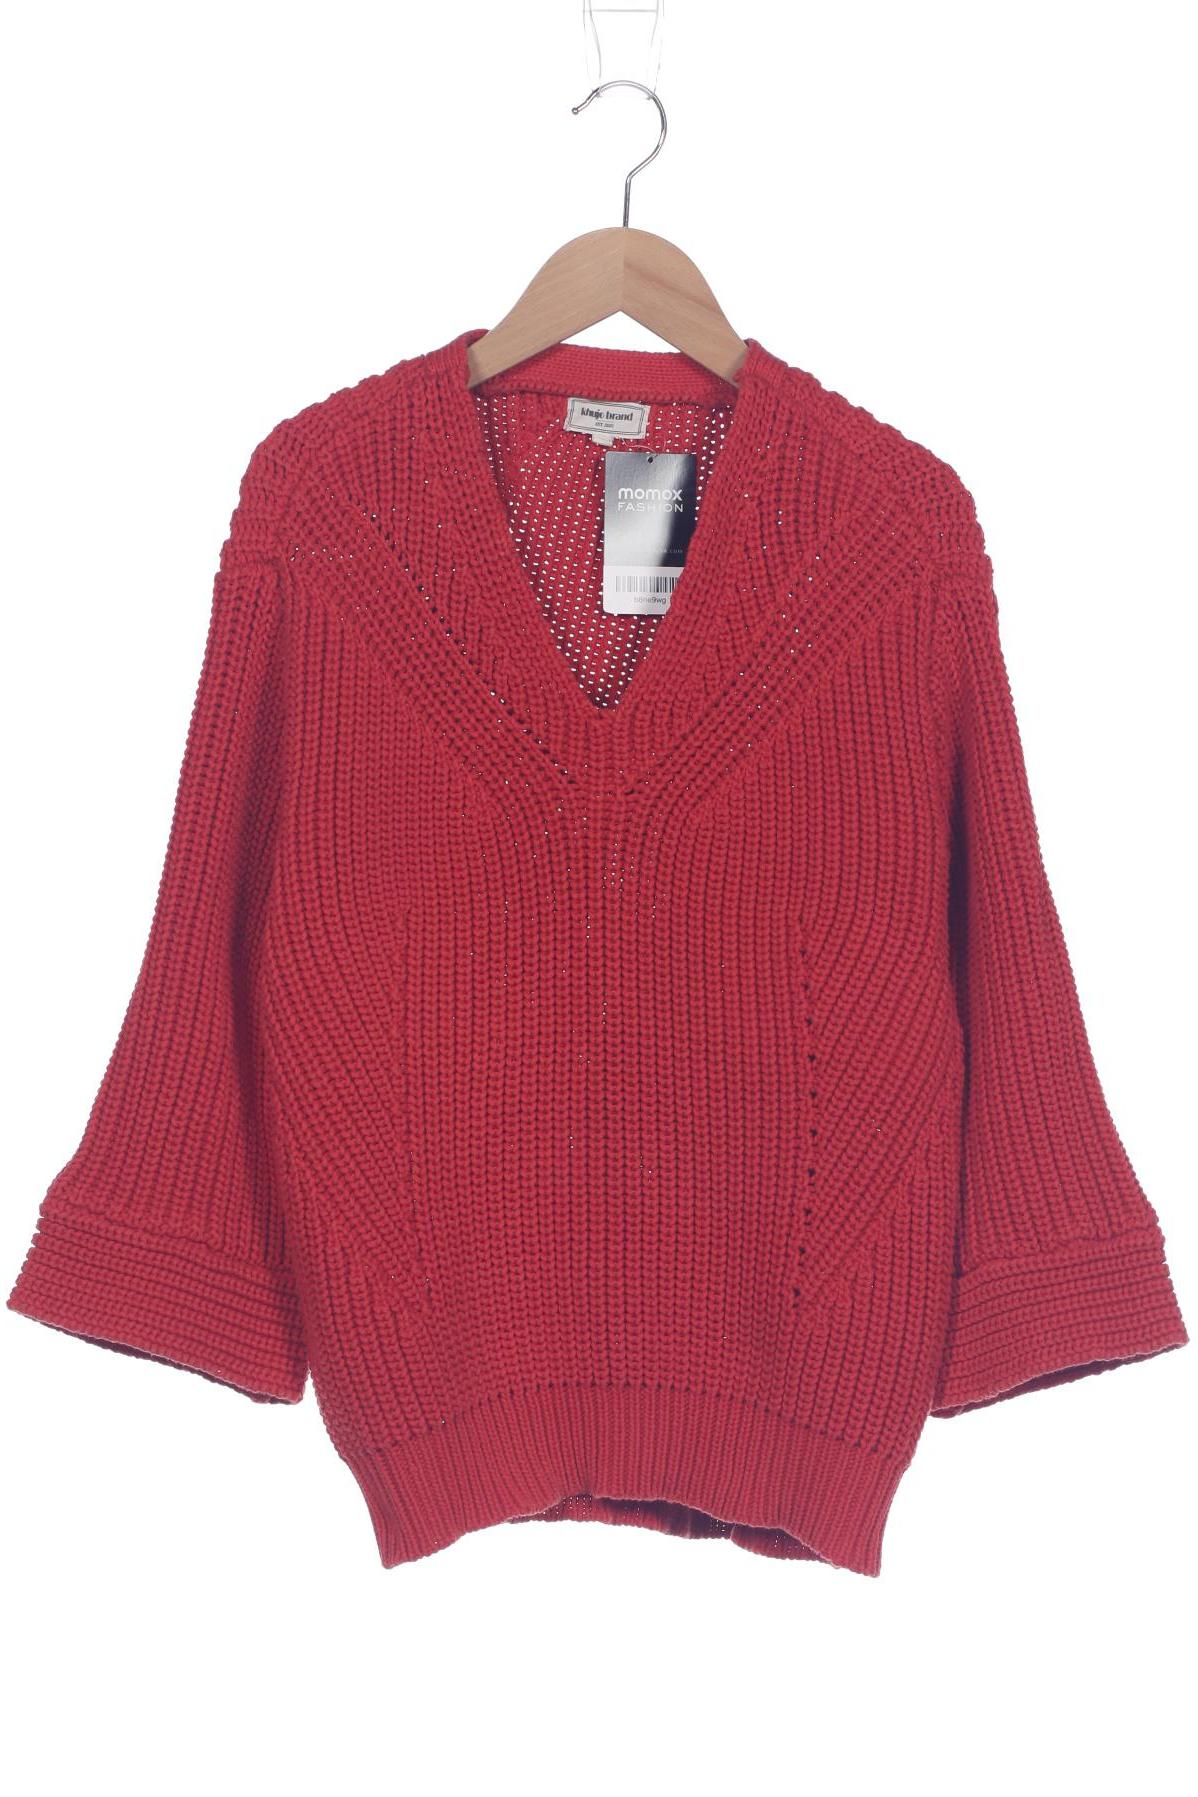 Khujo Damen Pullover, rot, Gr. 36 von Khujo